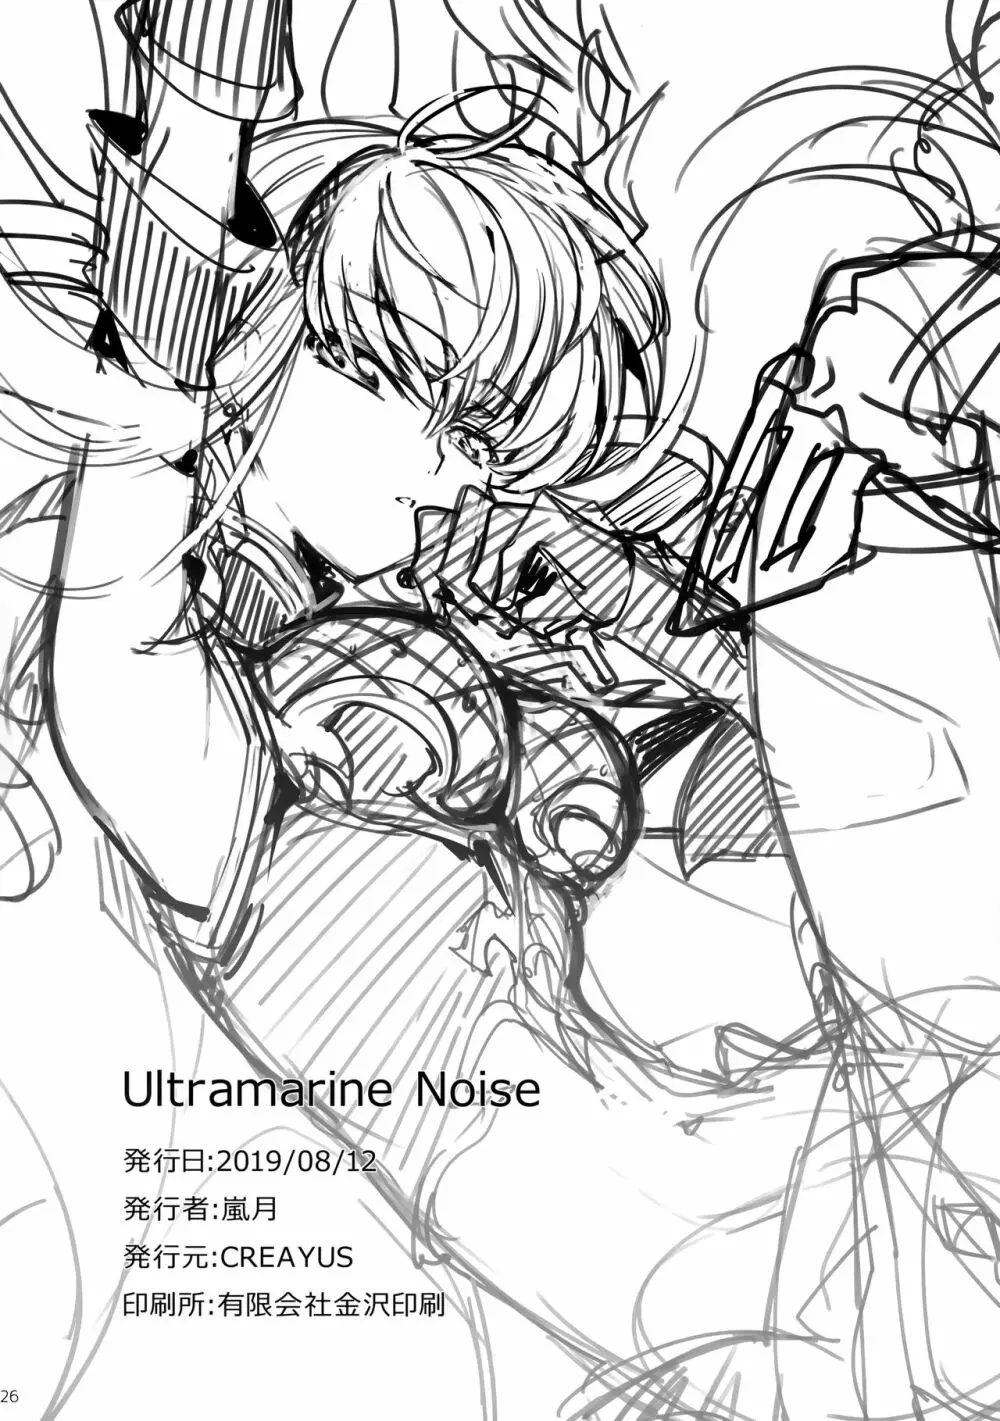 Ultramarine Noise - page27